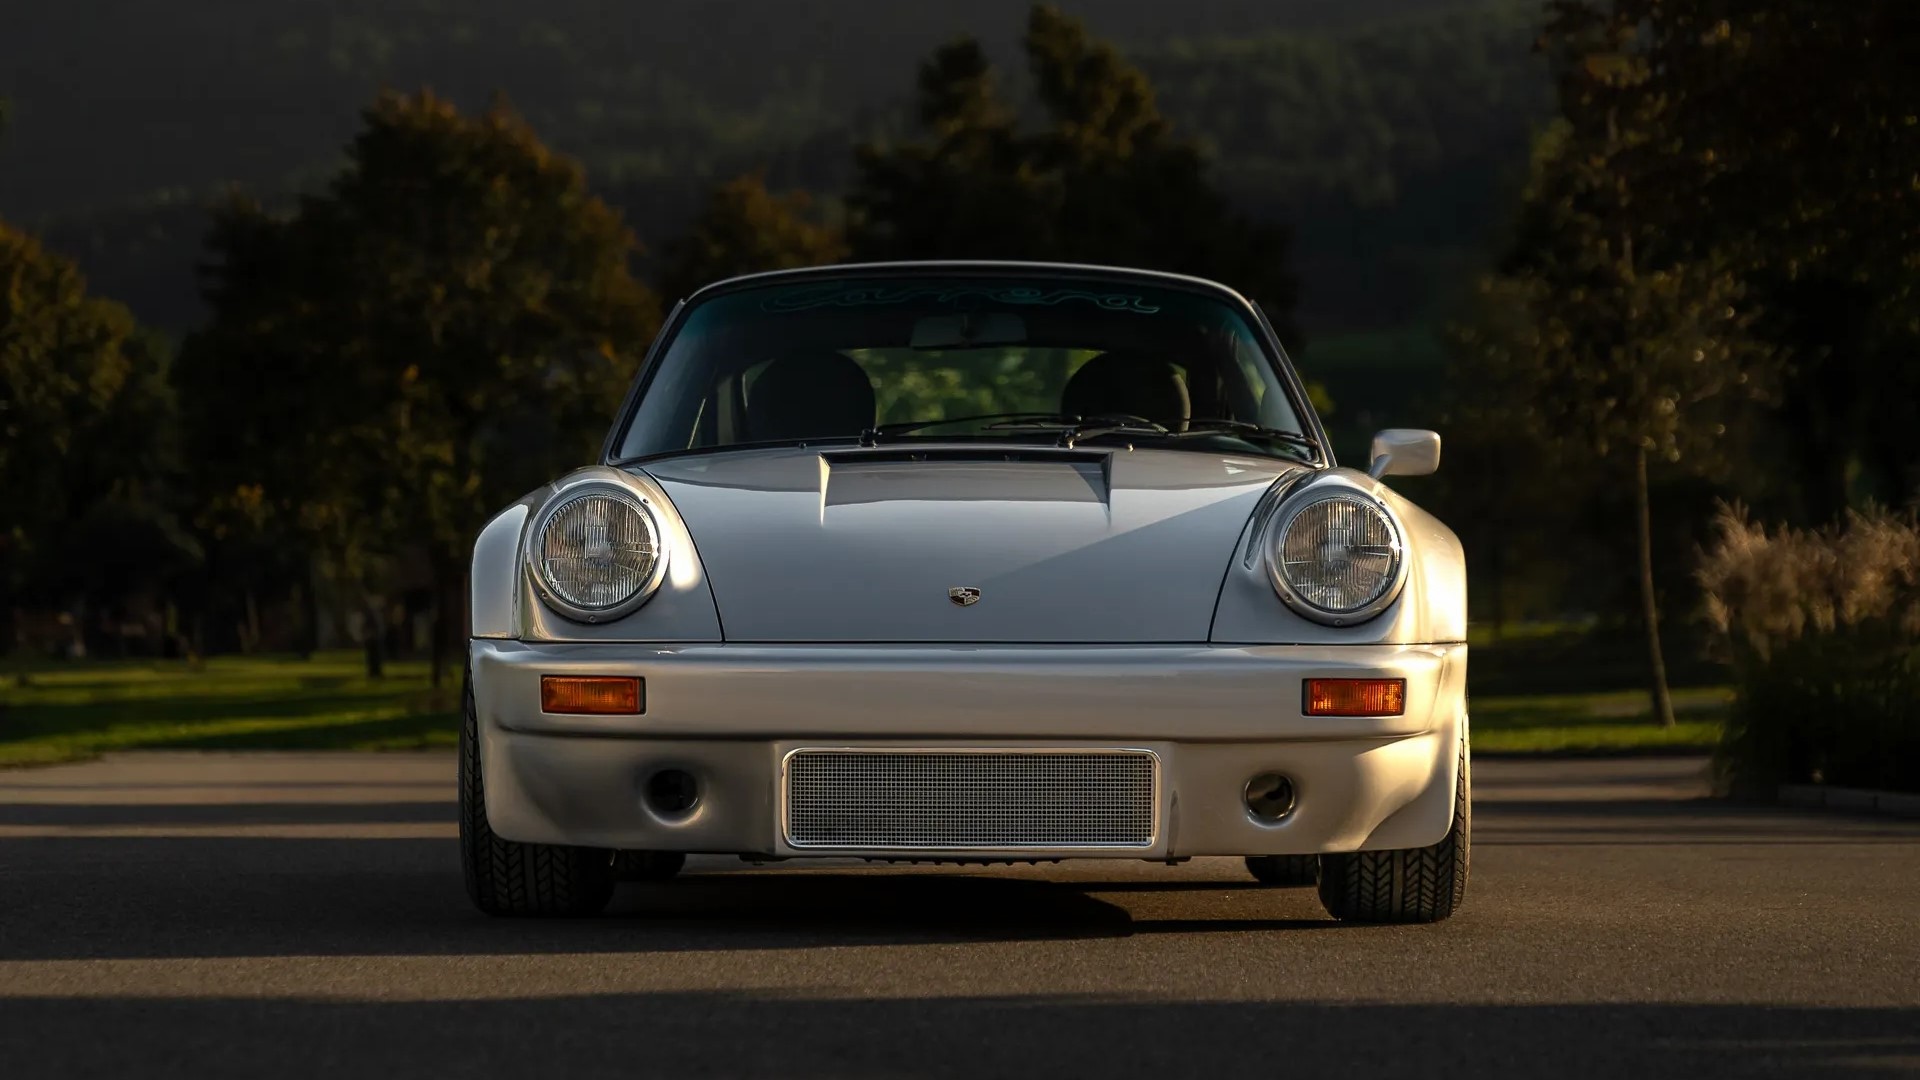 The Front Profile Of The Original Porsche 911 Turbo Concept